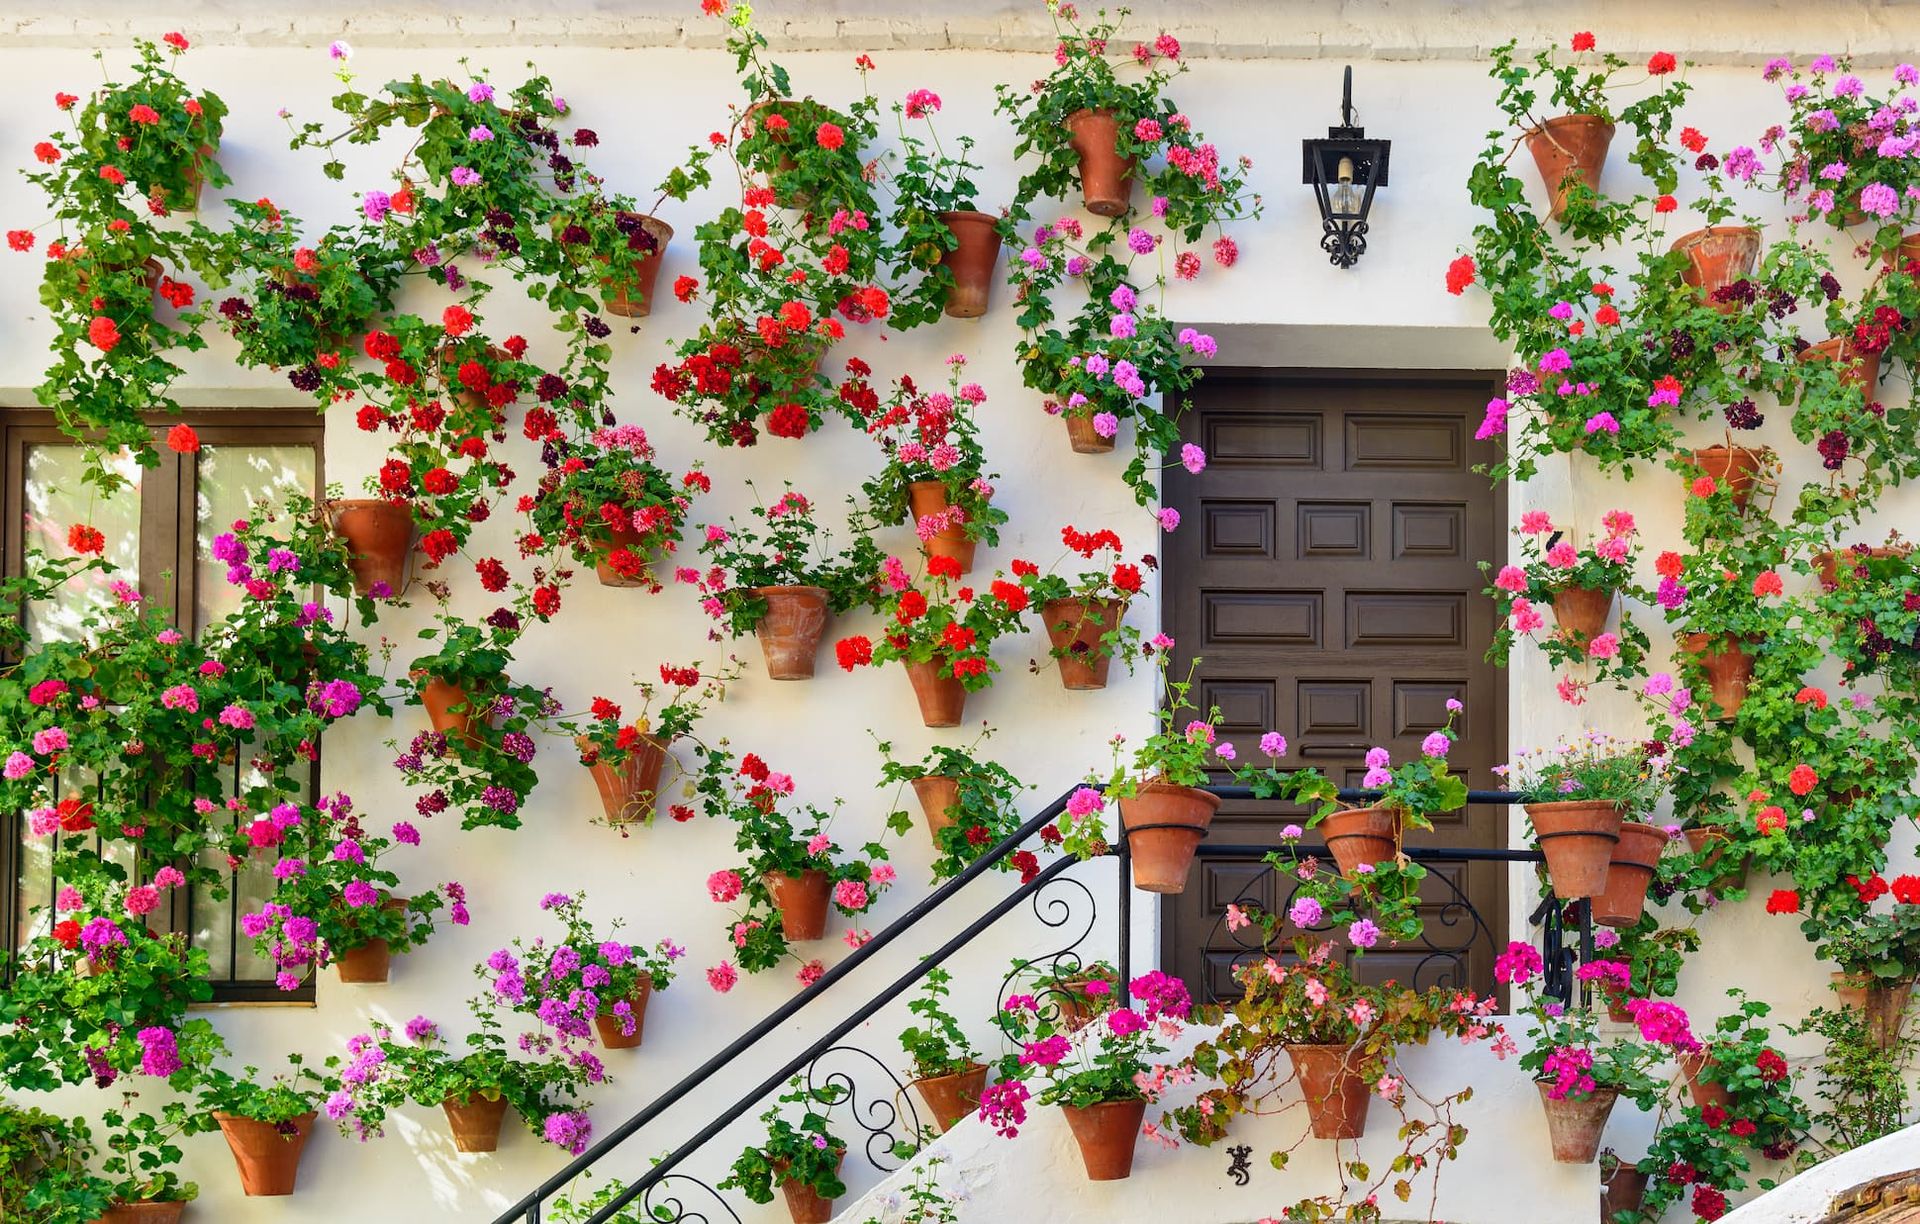 5 patios to visit in Córdoba